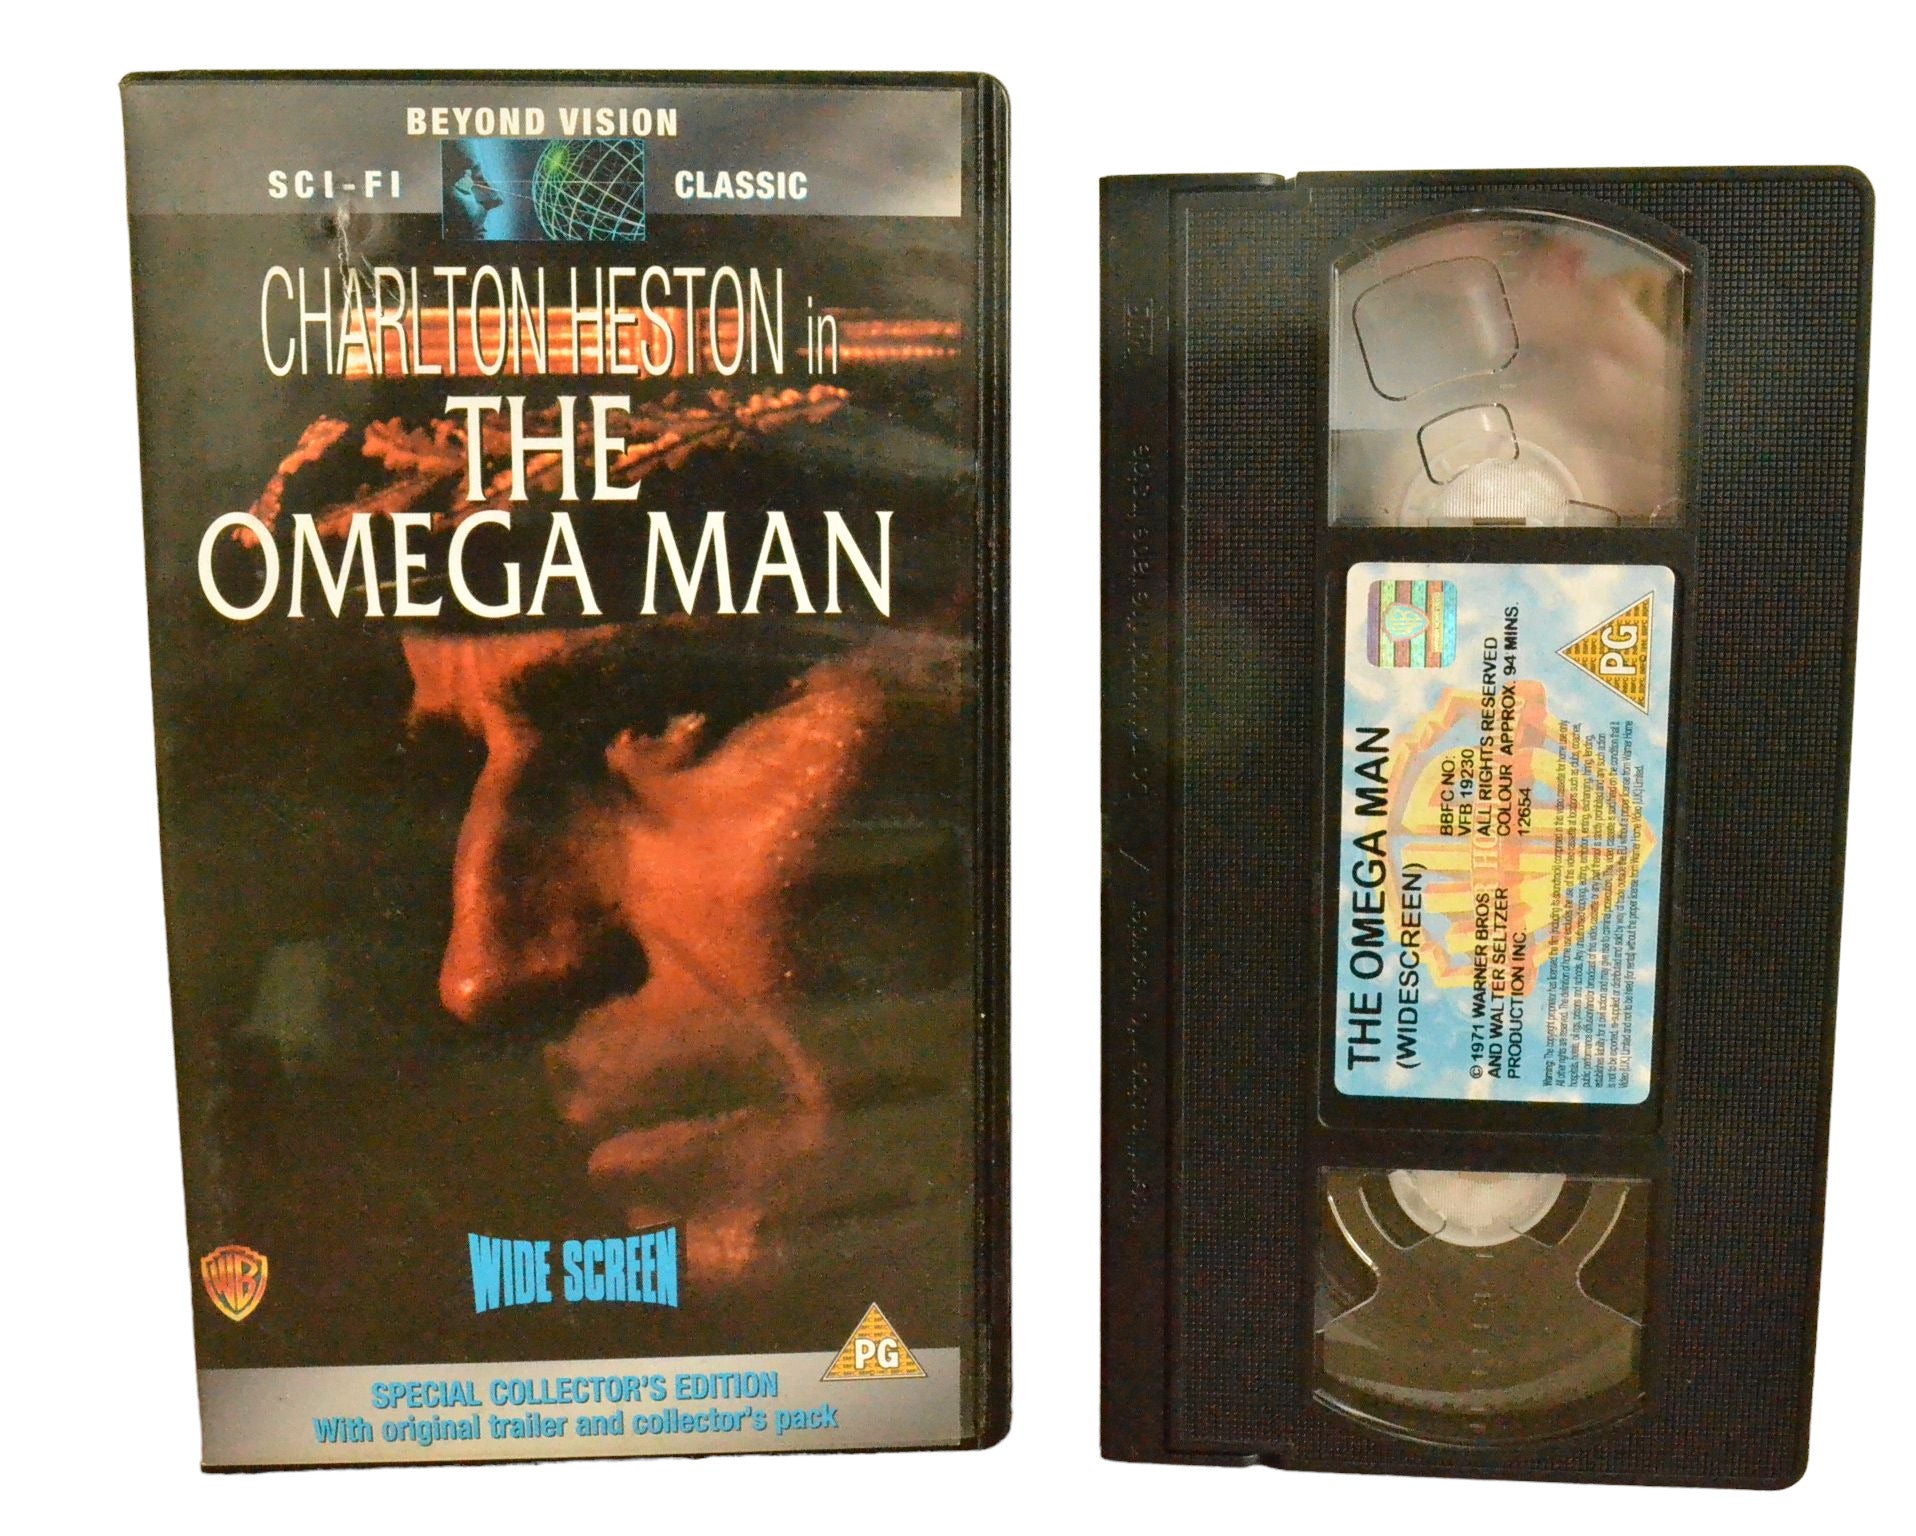 The Omega Man - Charlton Heston - Widescreen - Warner Home Video - SOI2654 - Drama - Pal - VHS-